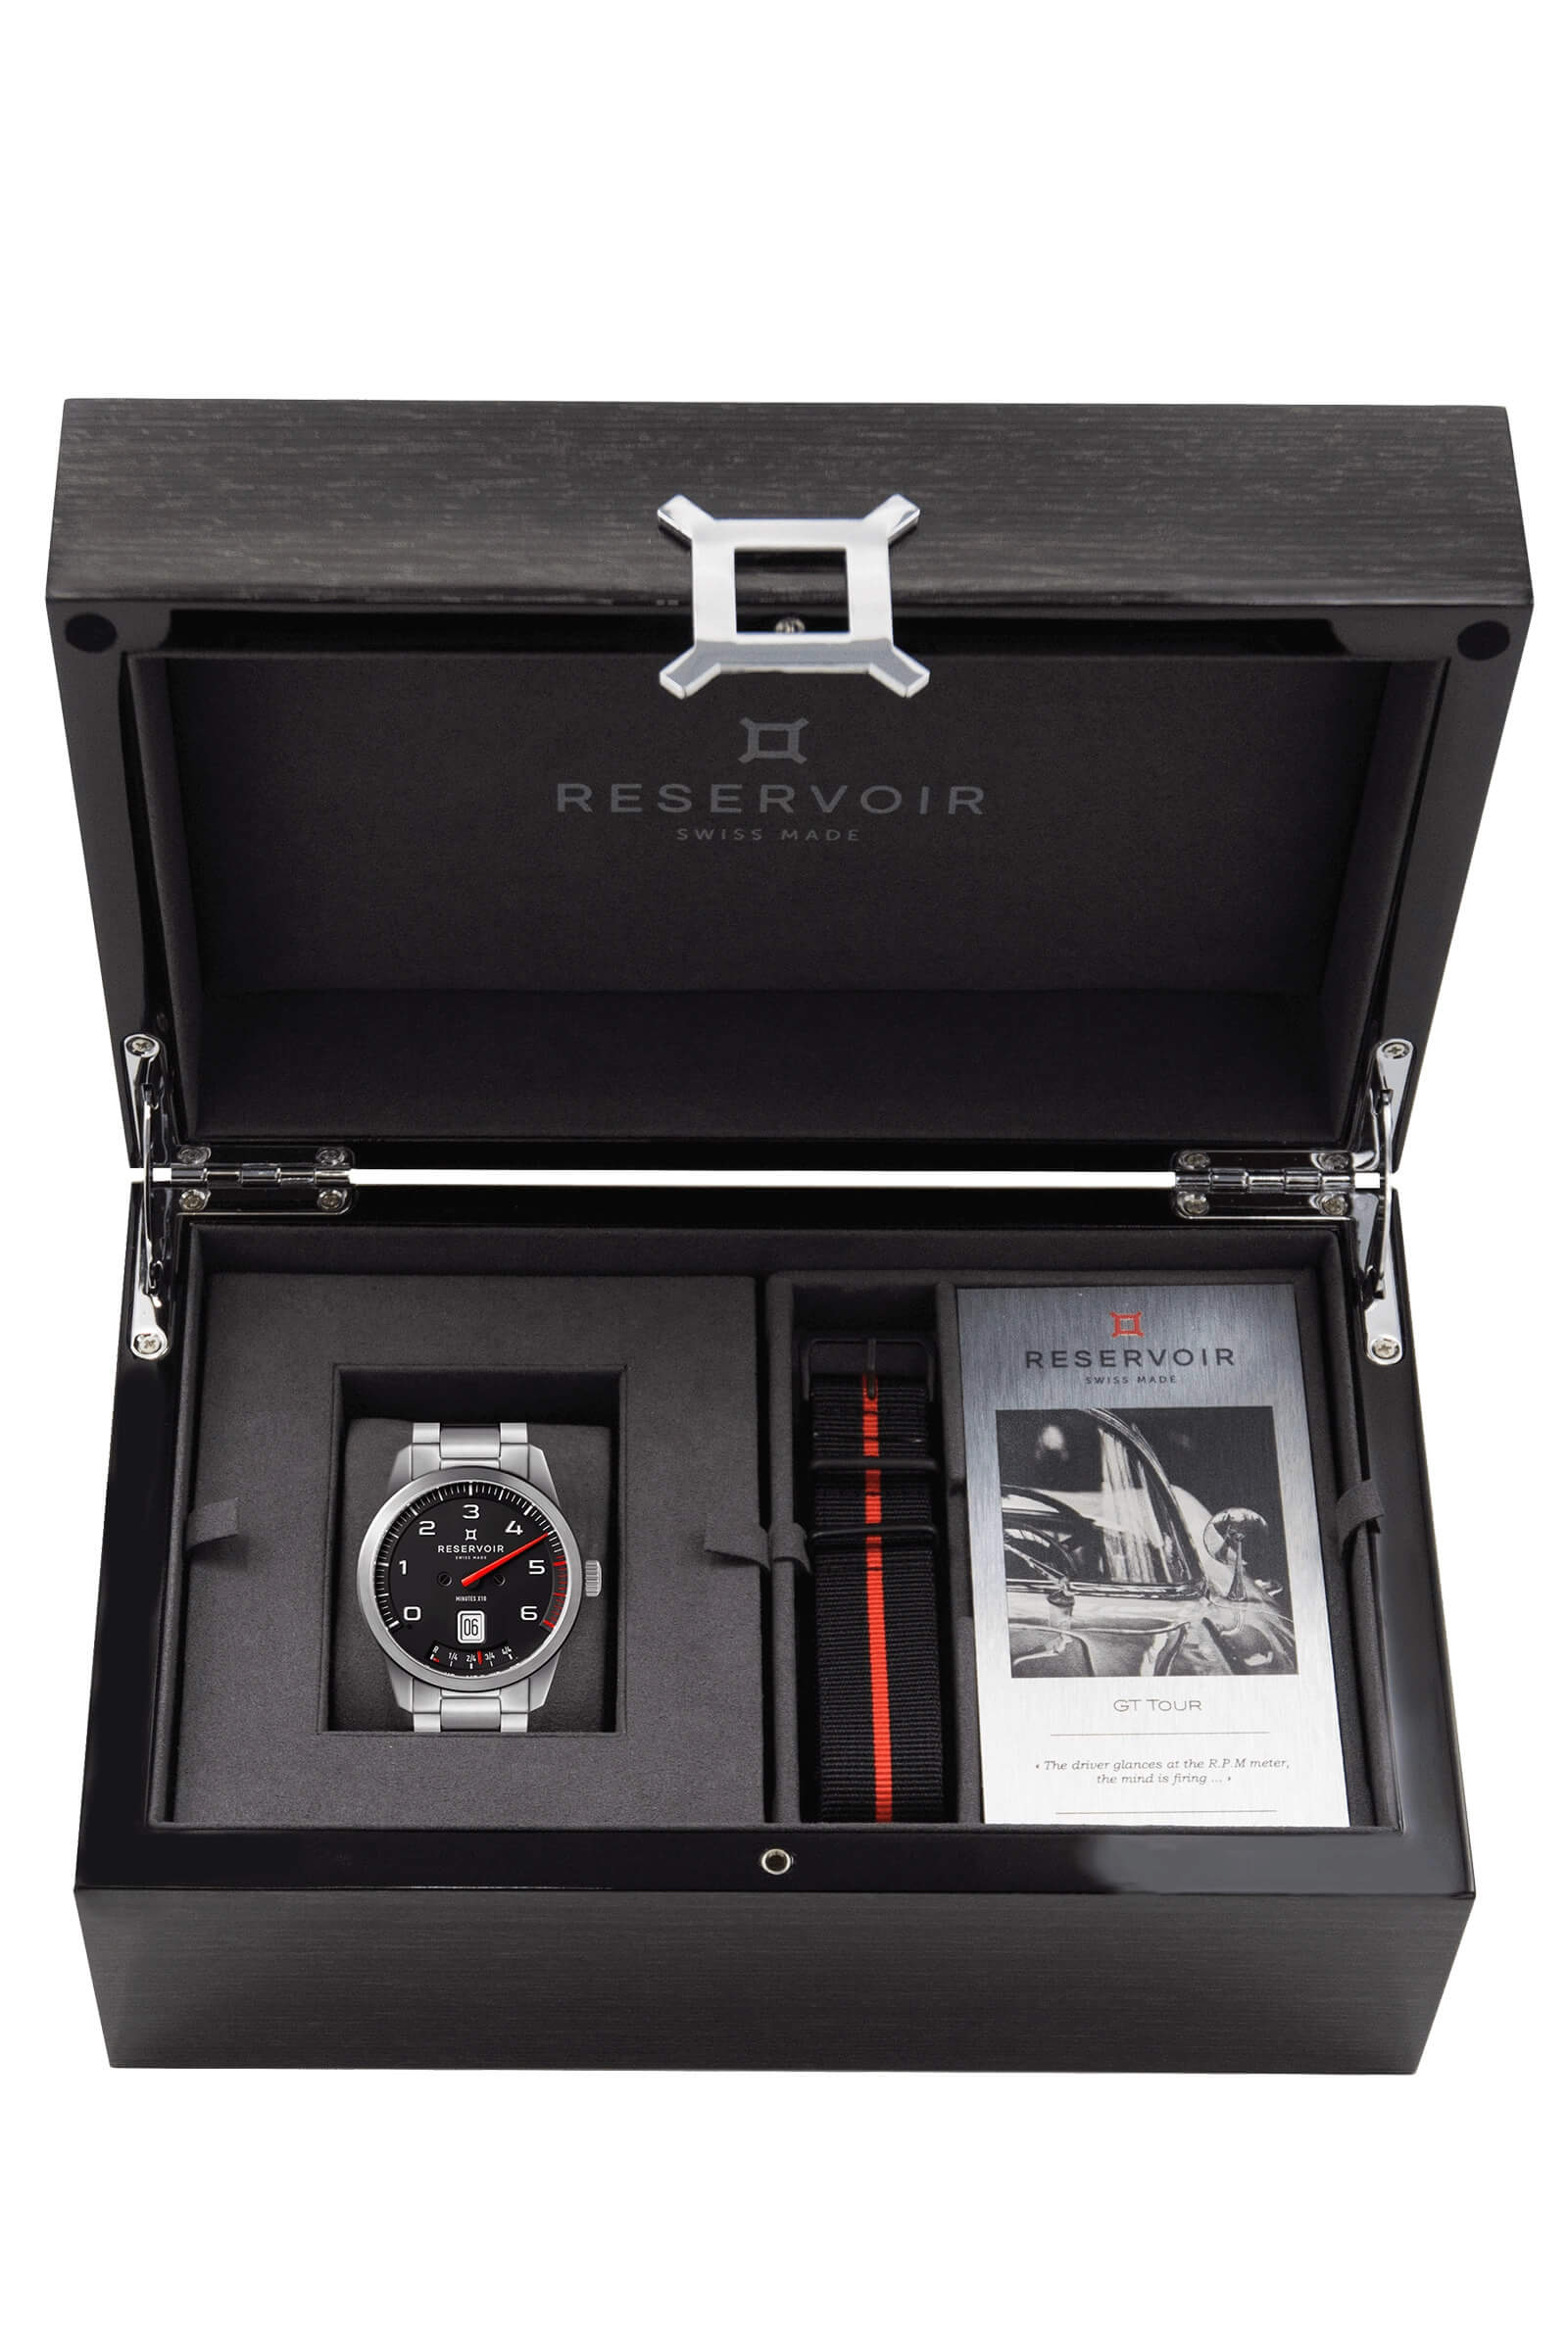 Luxury Media RESERVOIR watch in dark charcoal, light grey and medium grey-blue.